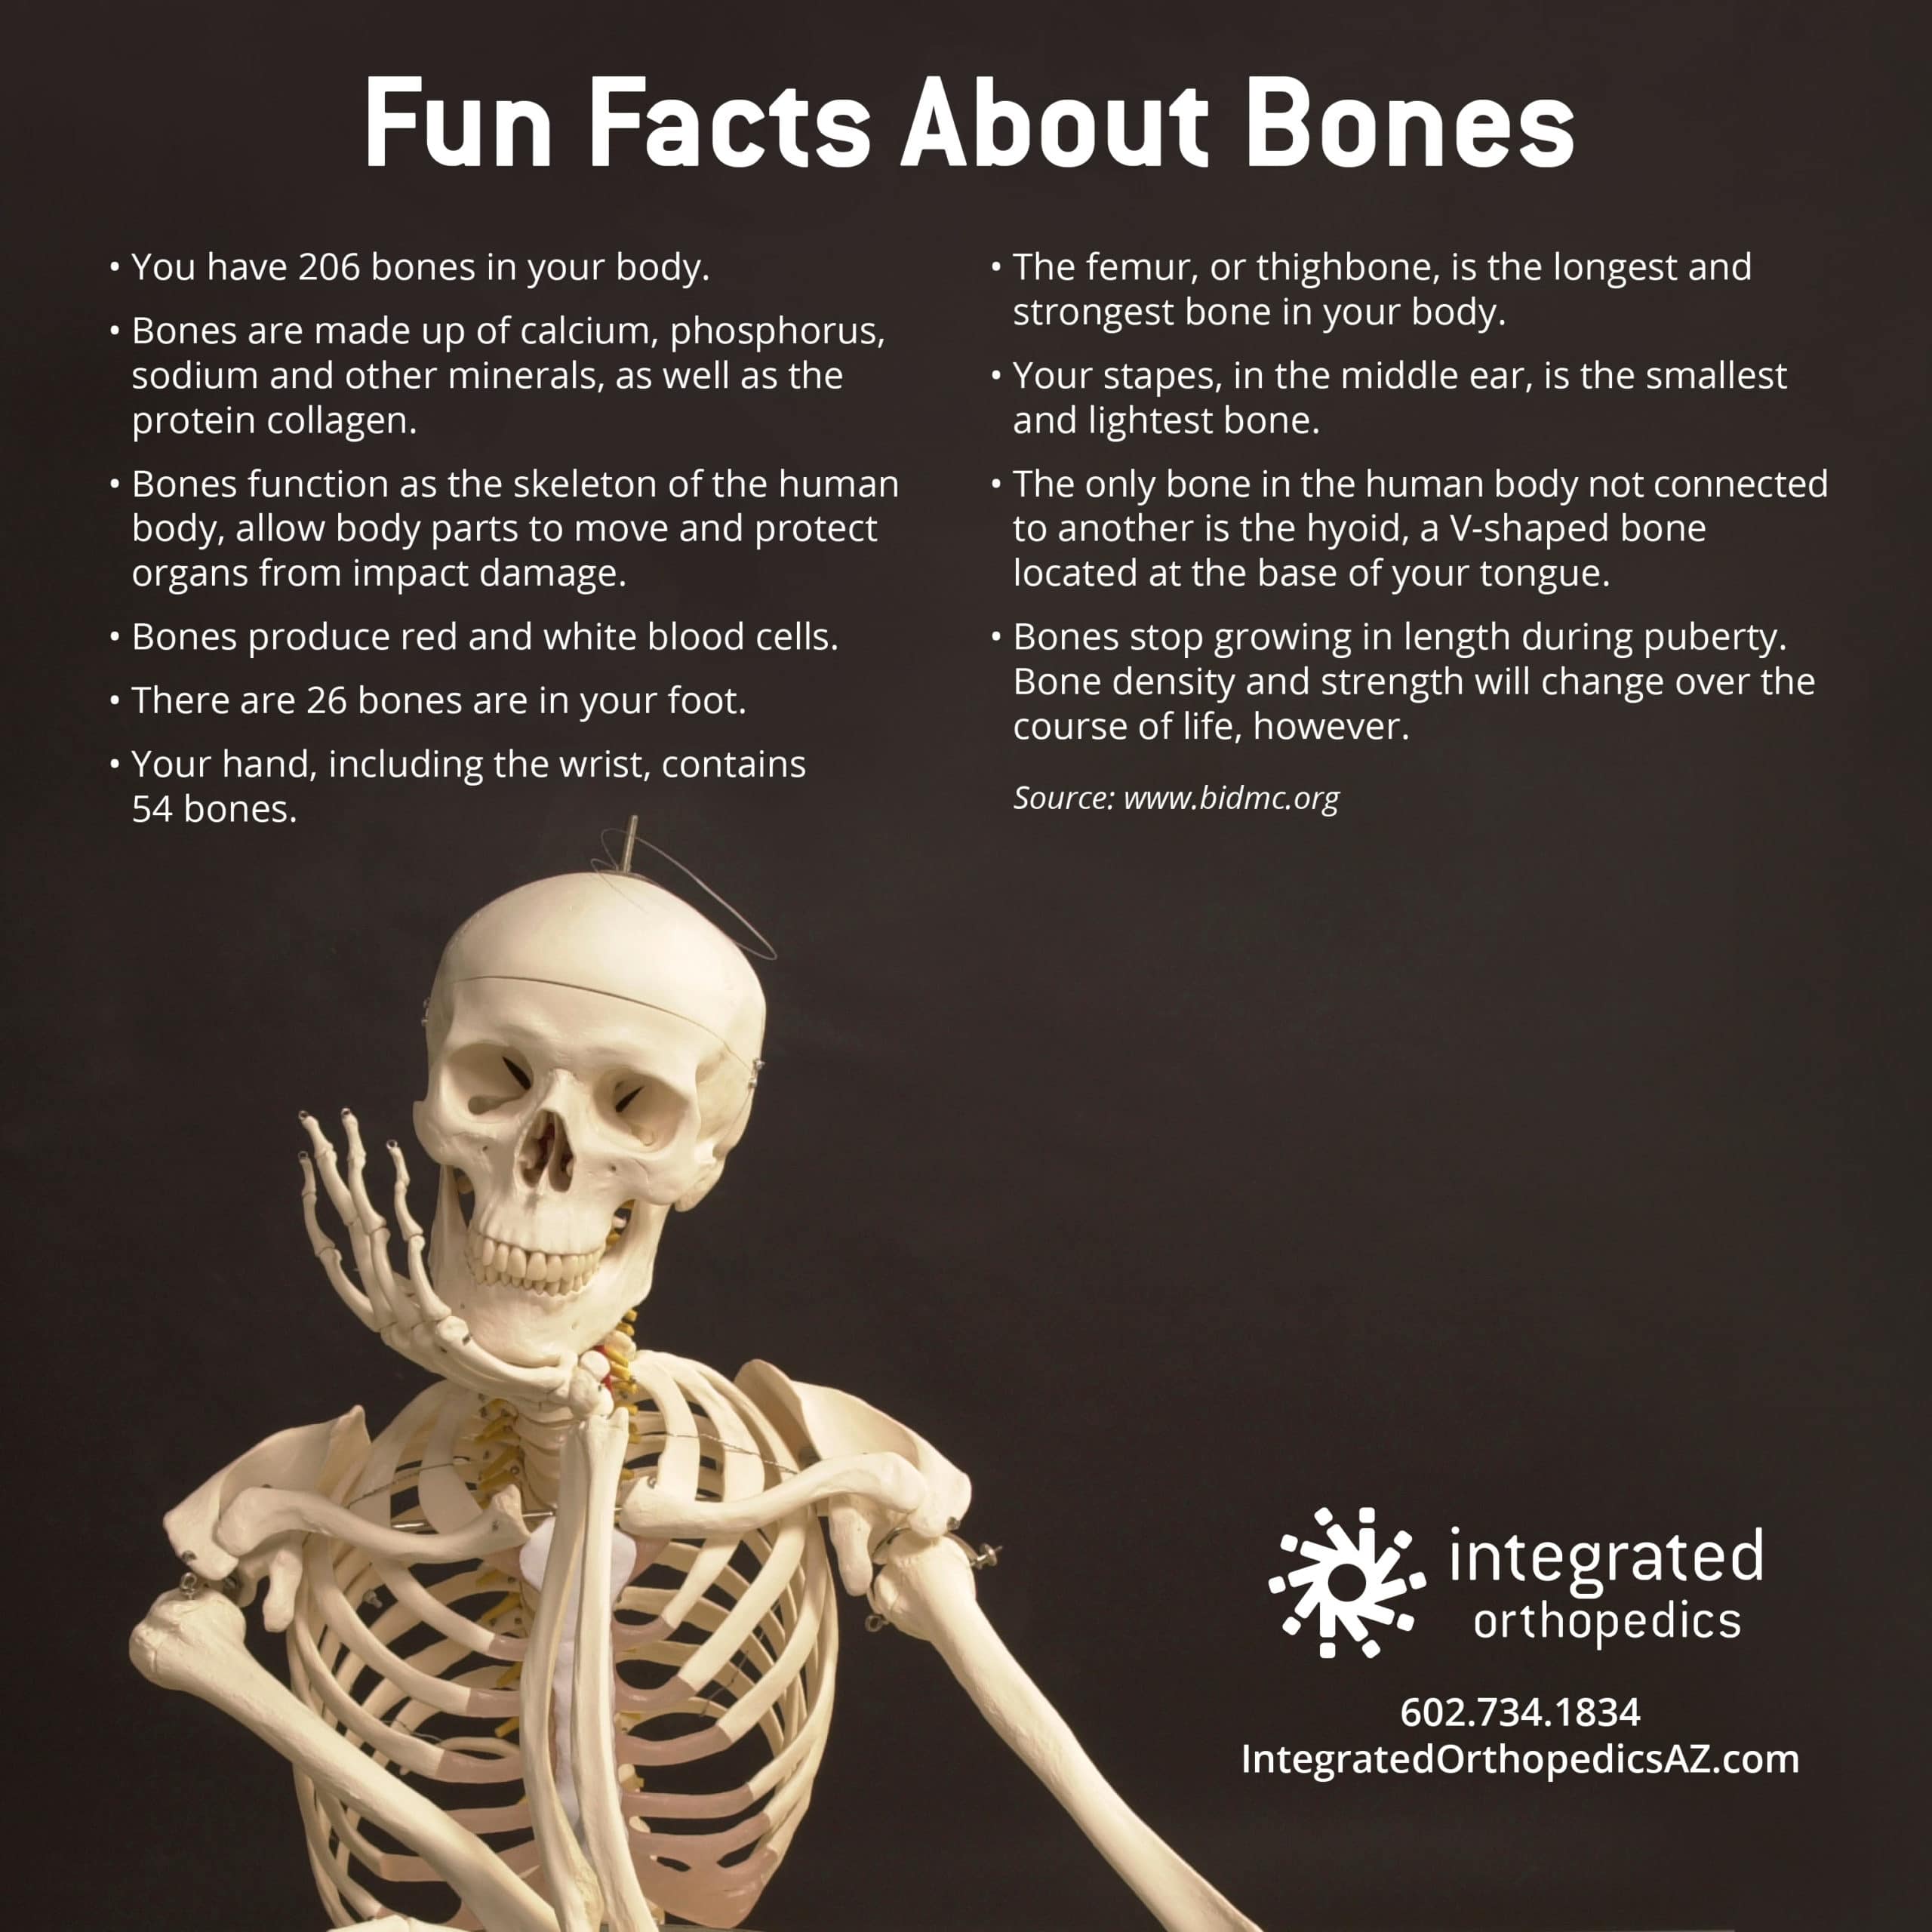 Top 5 Skull and Bones Facts 